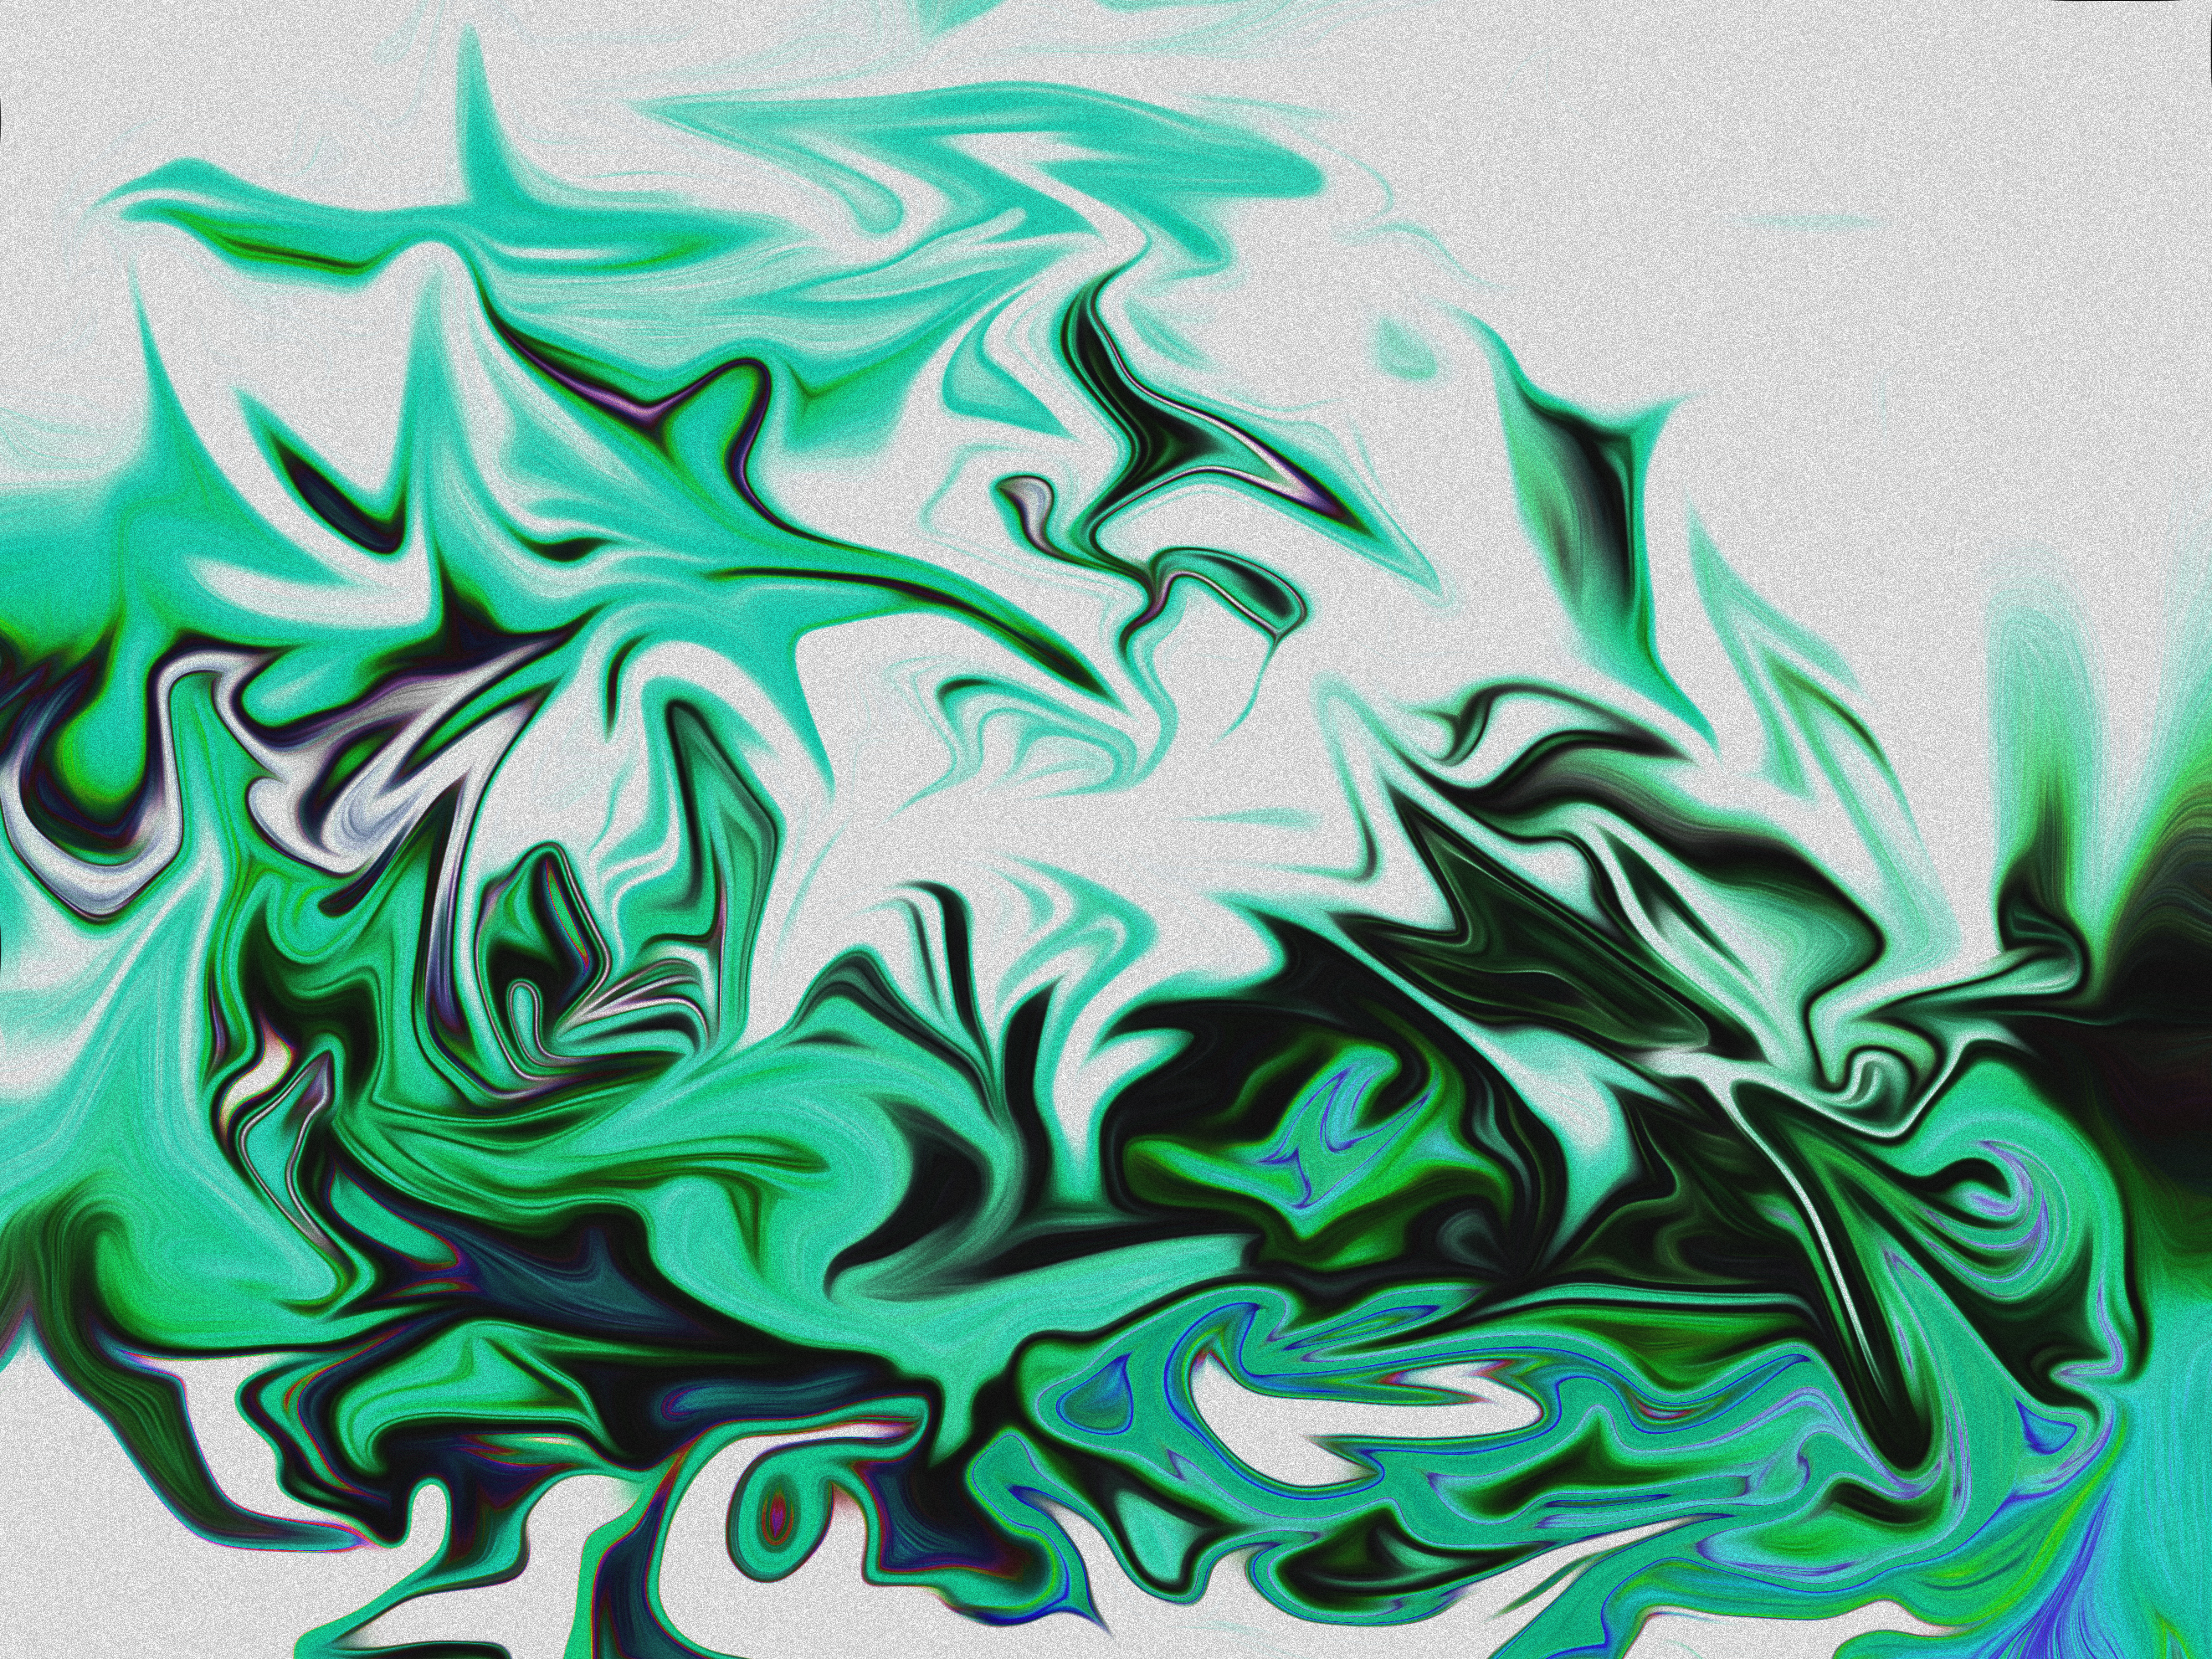 Abstract Digital Art Artwork Fluid Liquid Colorful Oil Painting Paint Splash Interference Dark 2643x1982